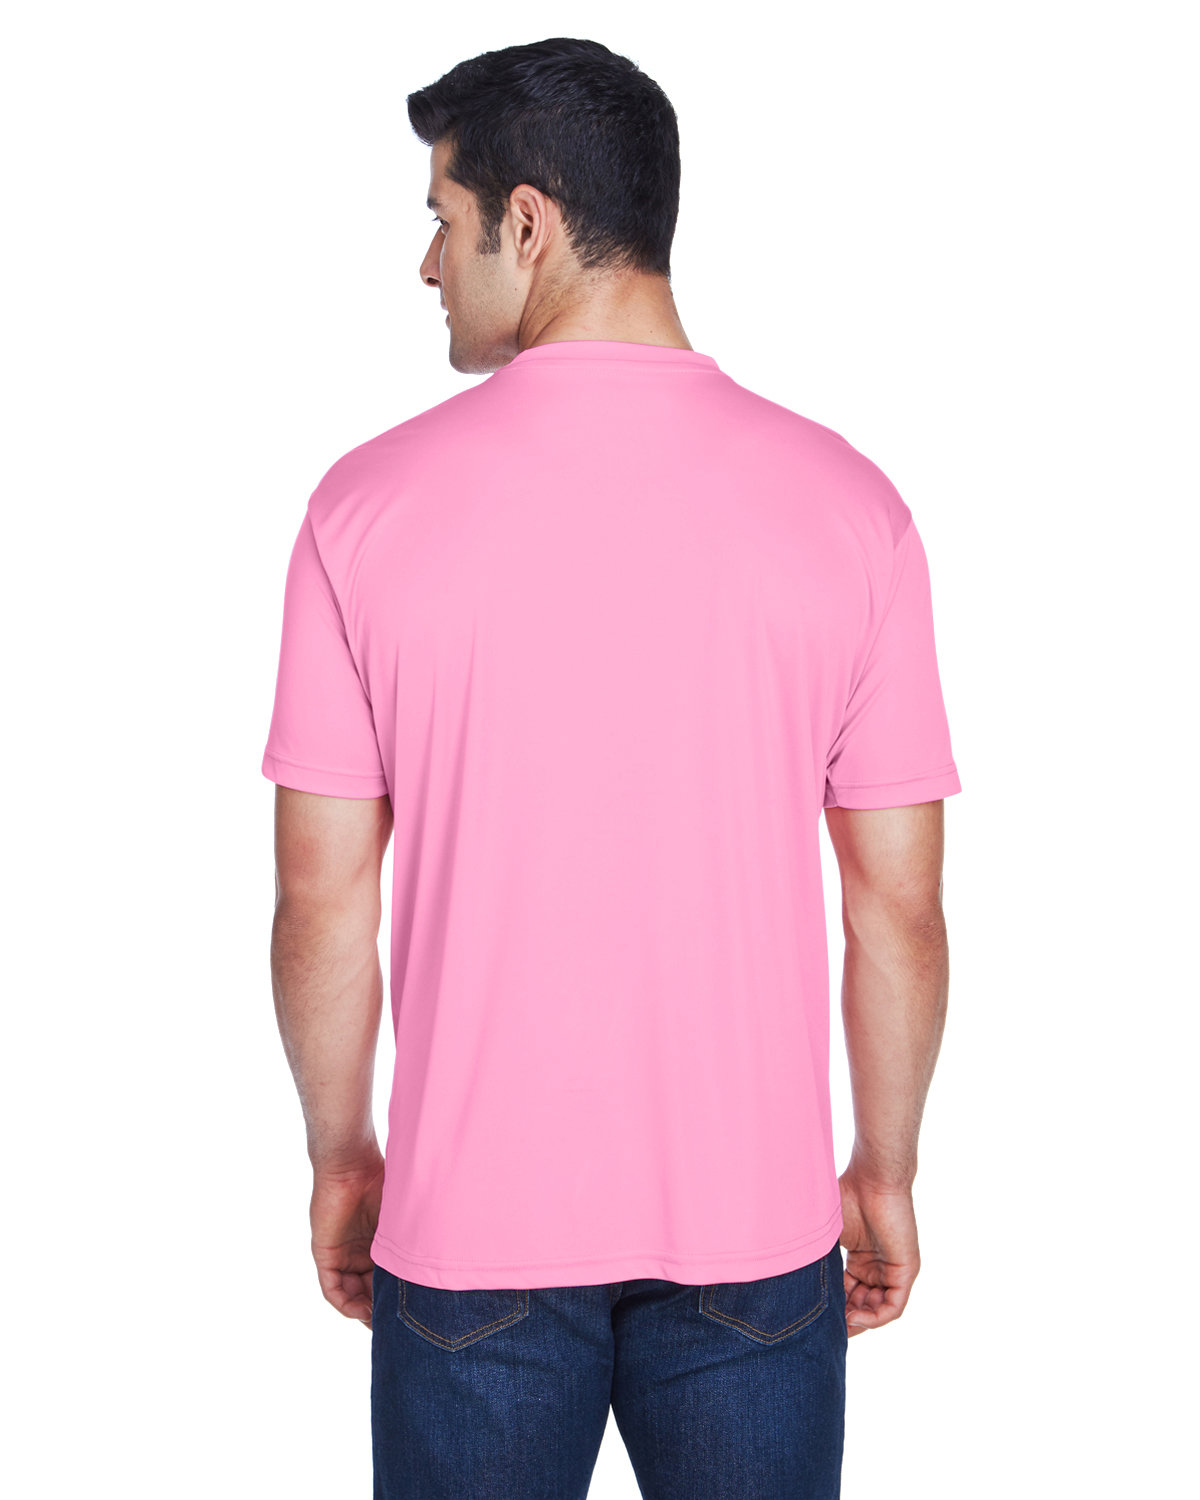 NEW Men's Moisture Wicking T-Shirt Performance Tee 30 Colors S-6XL 8420 ...